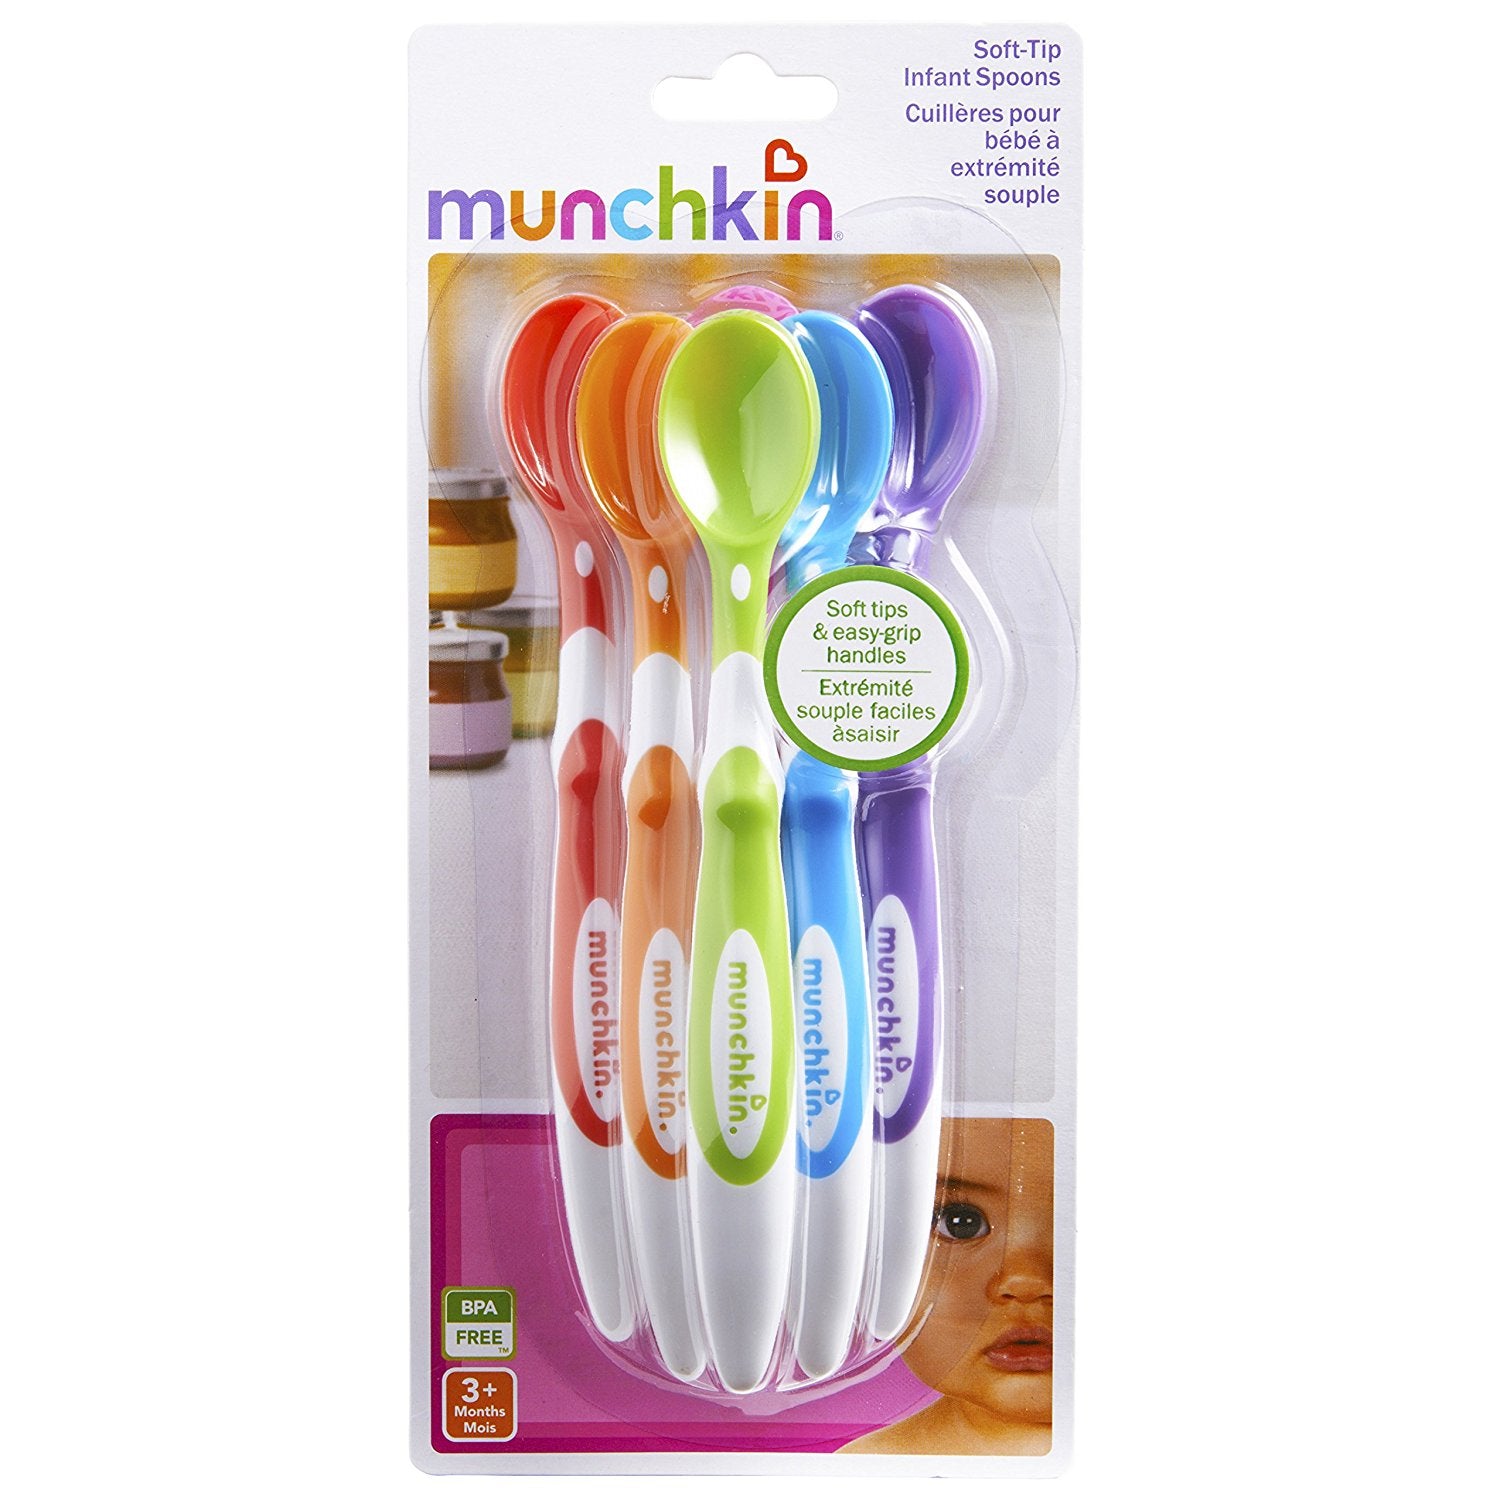 Munchkin Soft-Tip Infant Spoons – 6 Pack